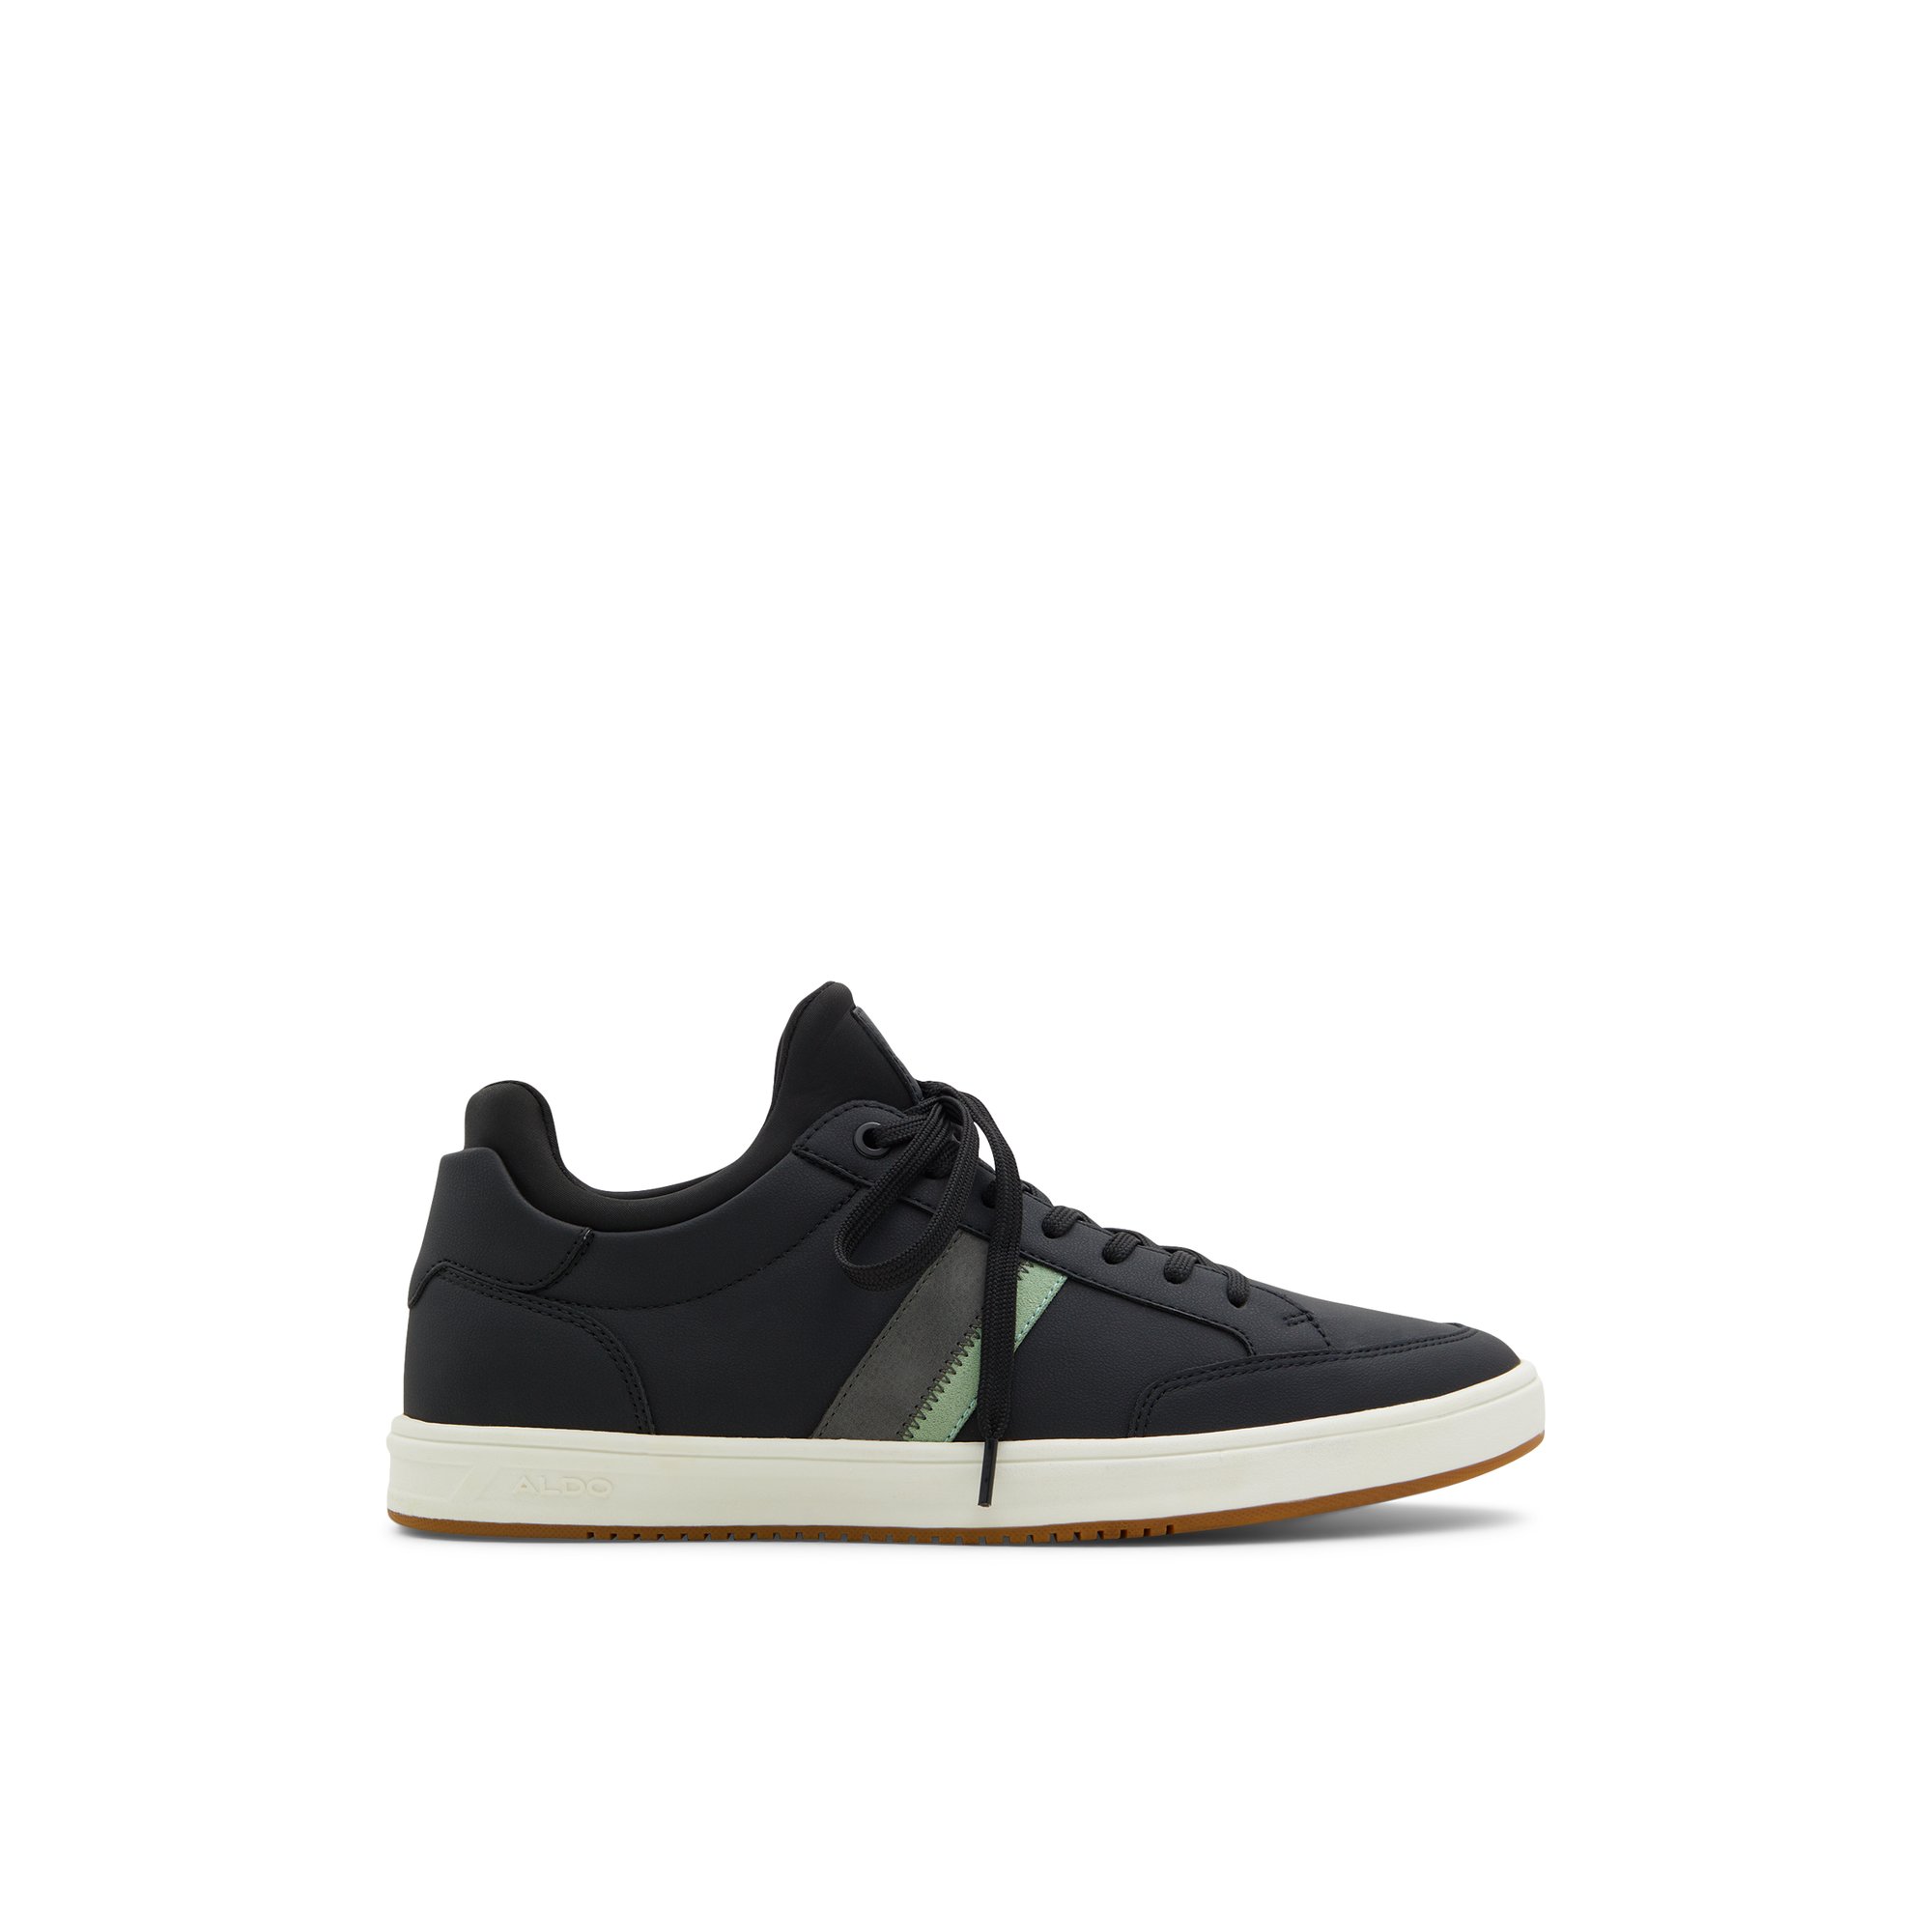 ALDO Rhiade - Men's Sneakers Low Top - Black